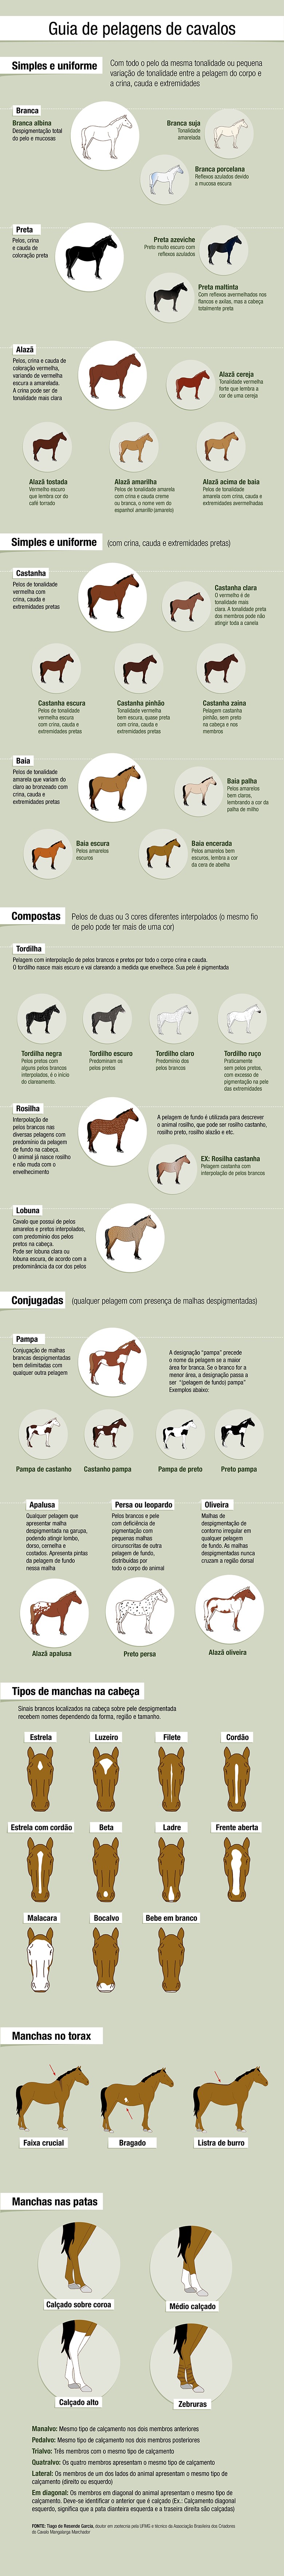 guia-pelagens-cavalo-infografico (Foto: Filipe Borin/Ed. Globo)